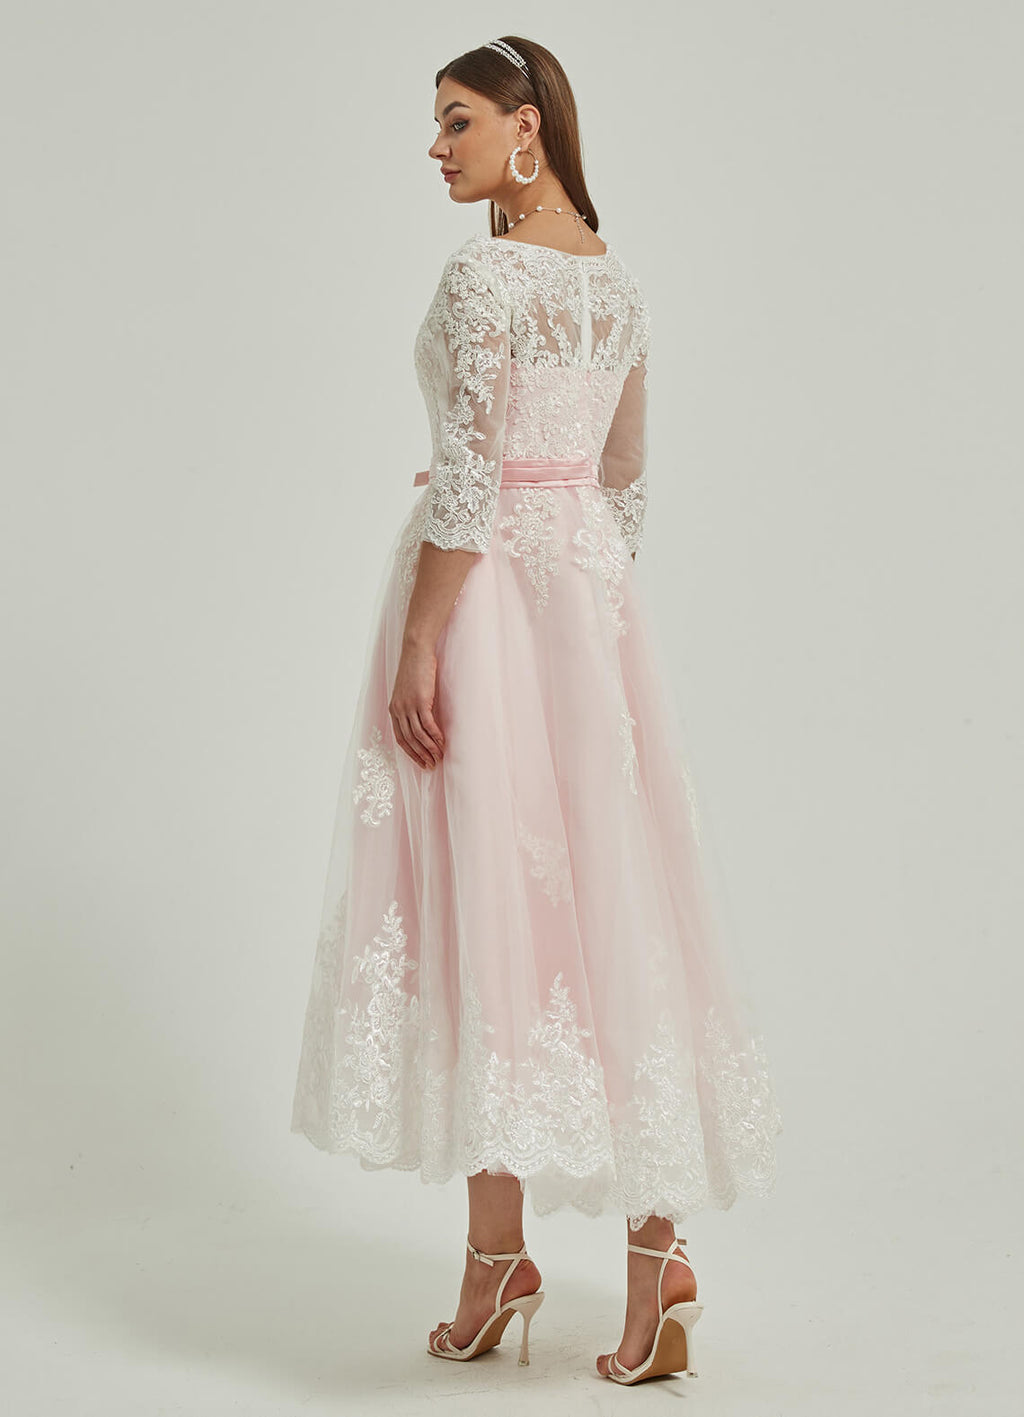 Diamond White / Blush Embroidery Lace A-Line 3/4 Sleeve High Low Wedding Dress Tessa